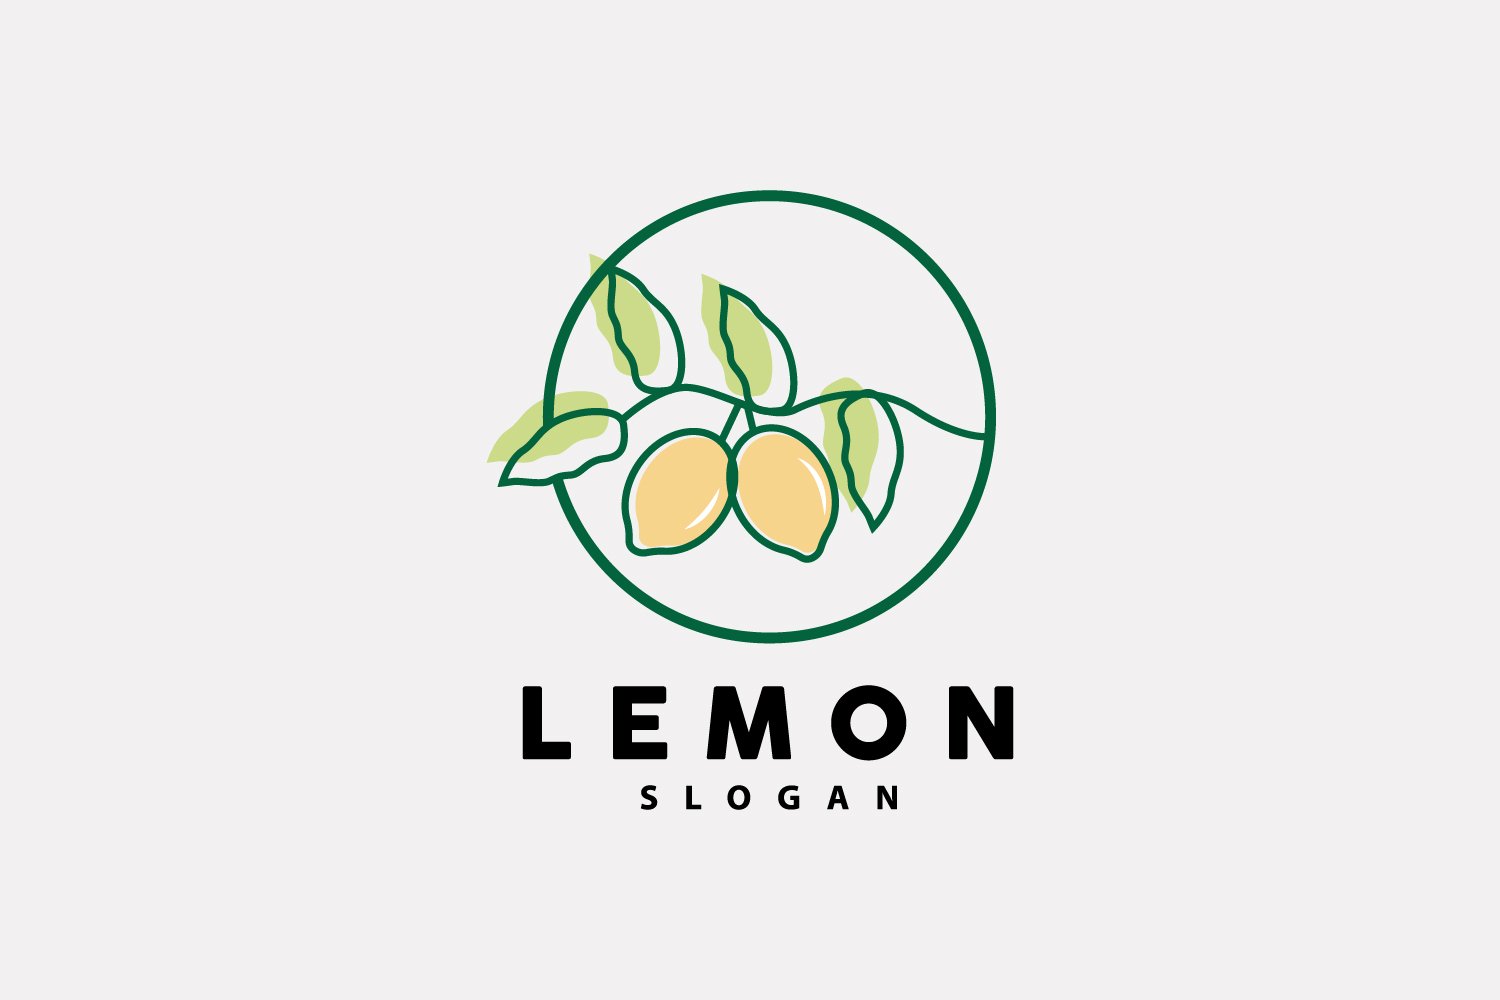 Lemon Logo Fresh Lemon Juice IllustrationV21